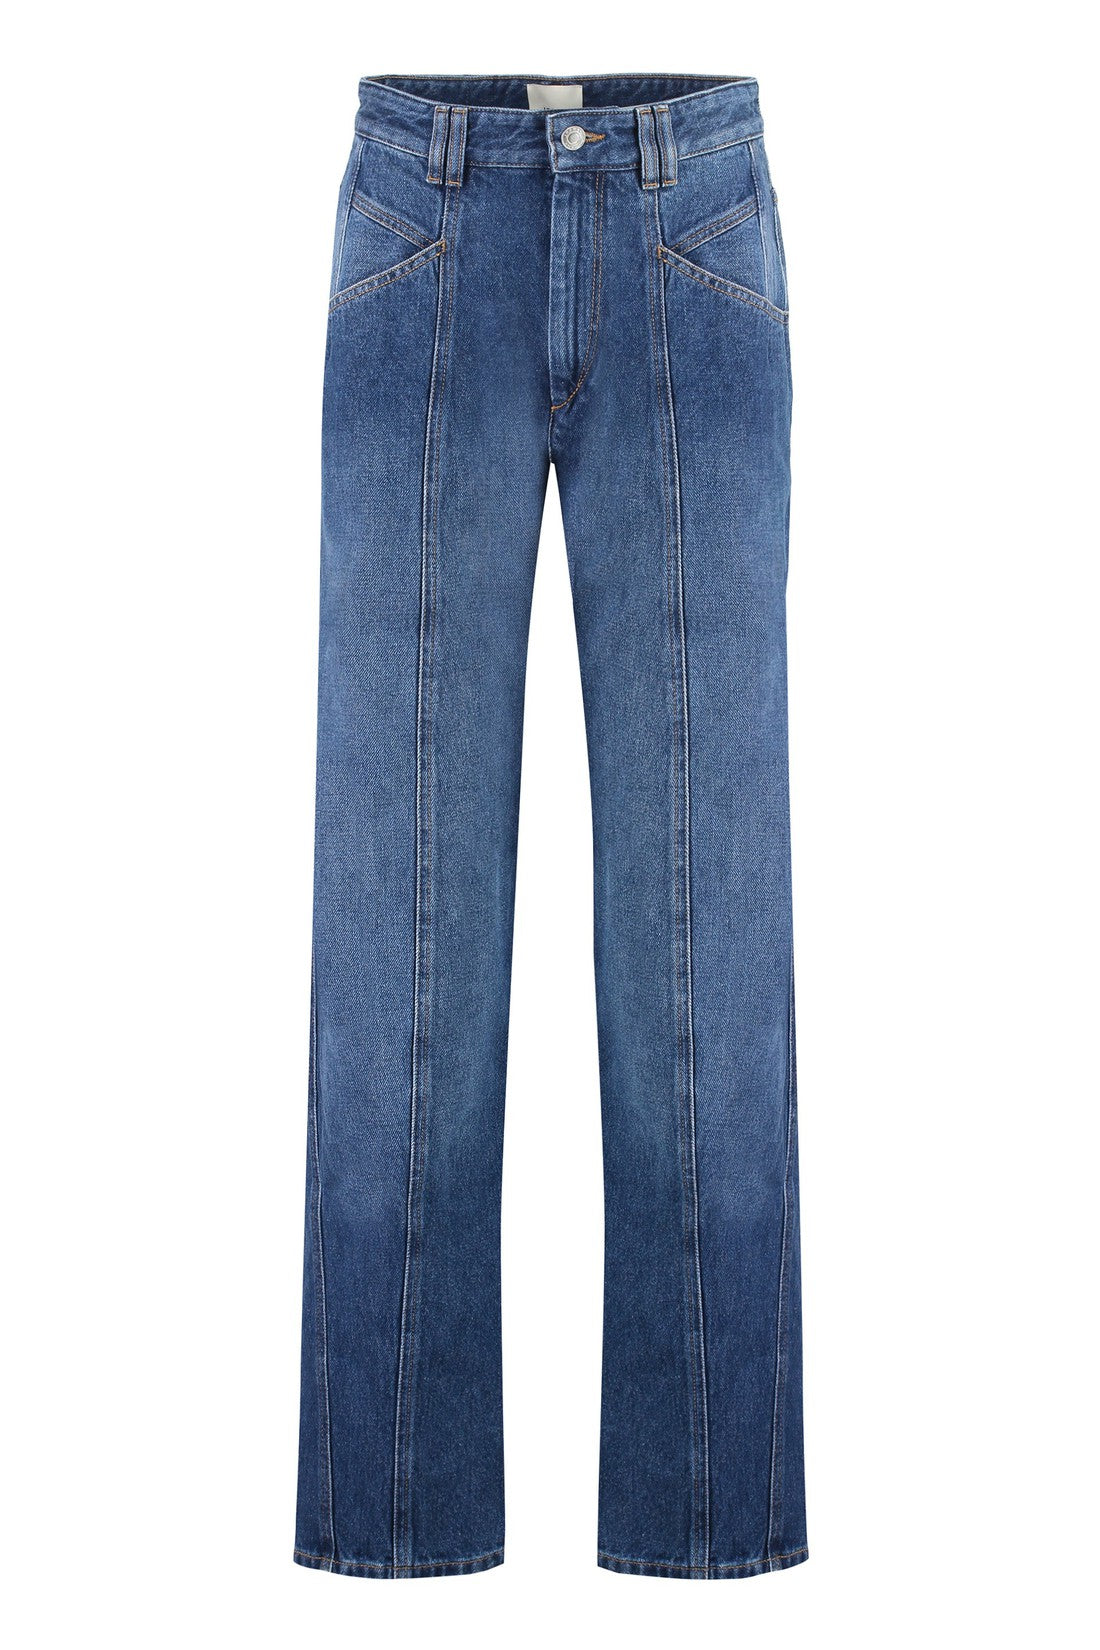 Isabel Marant-OUTLET-SALE-Vetan tapered fit jeans-ARCHIVIST